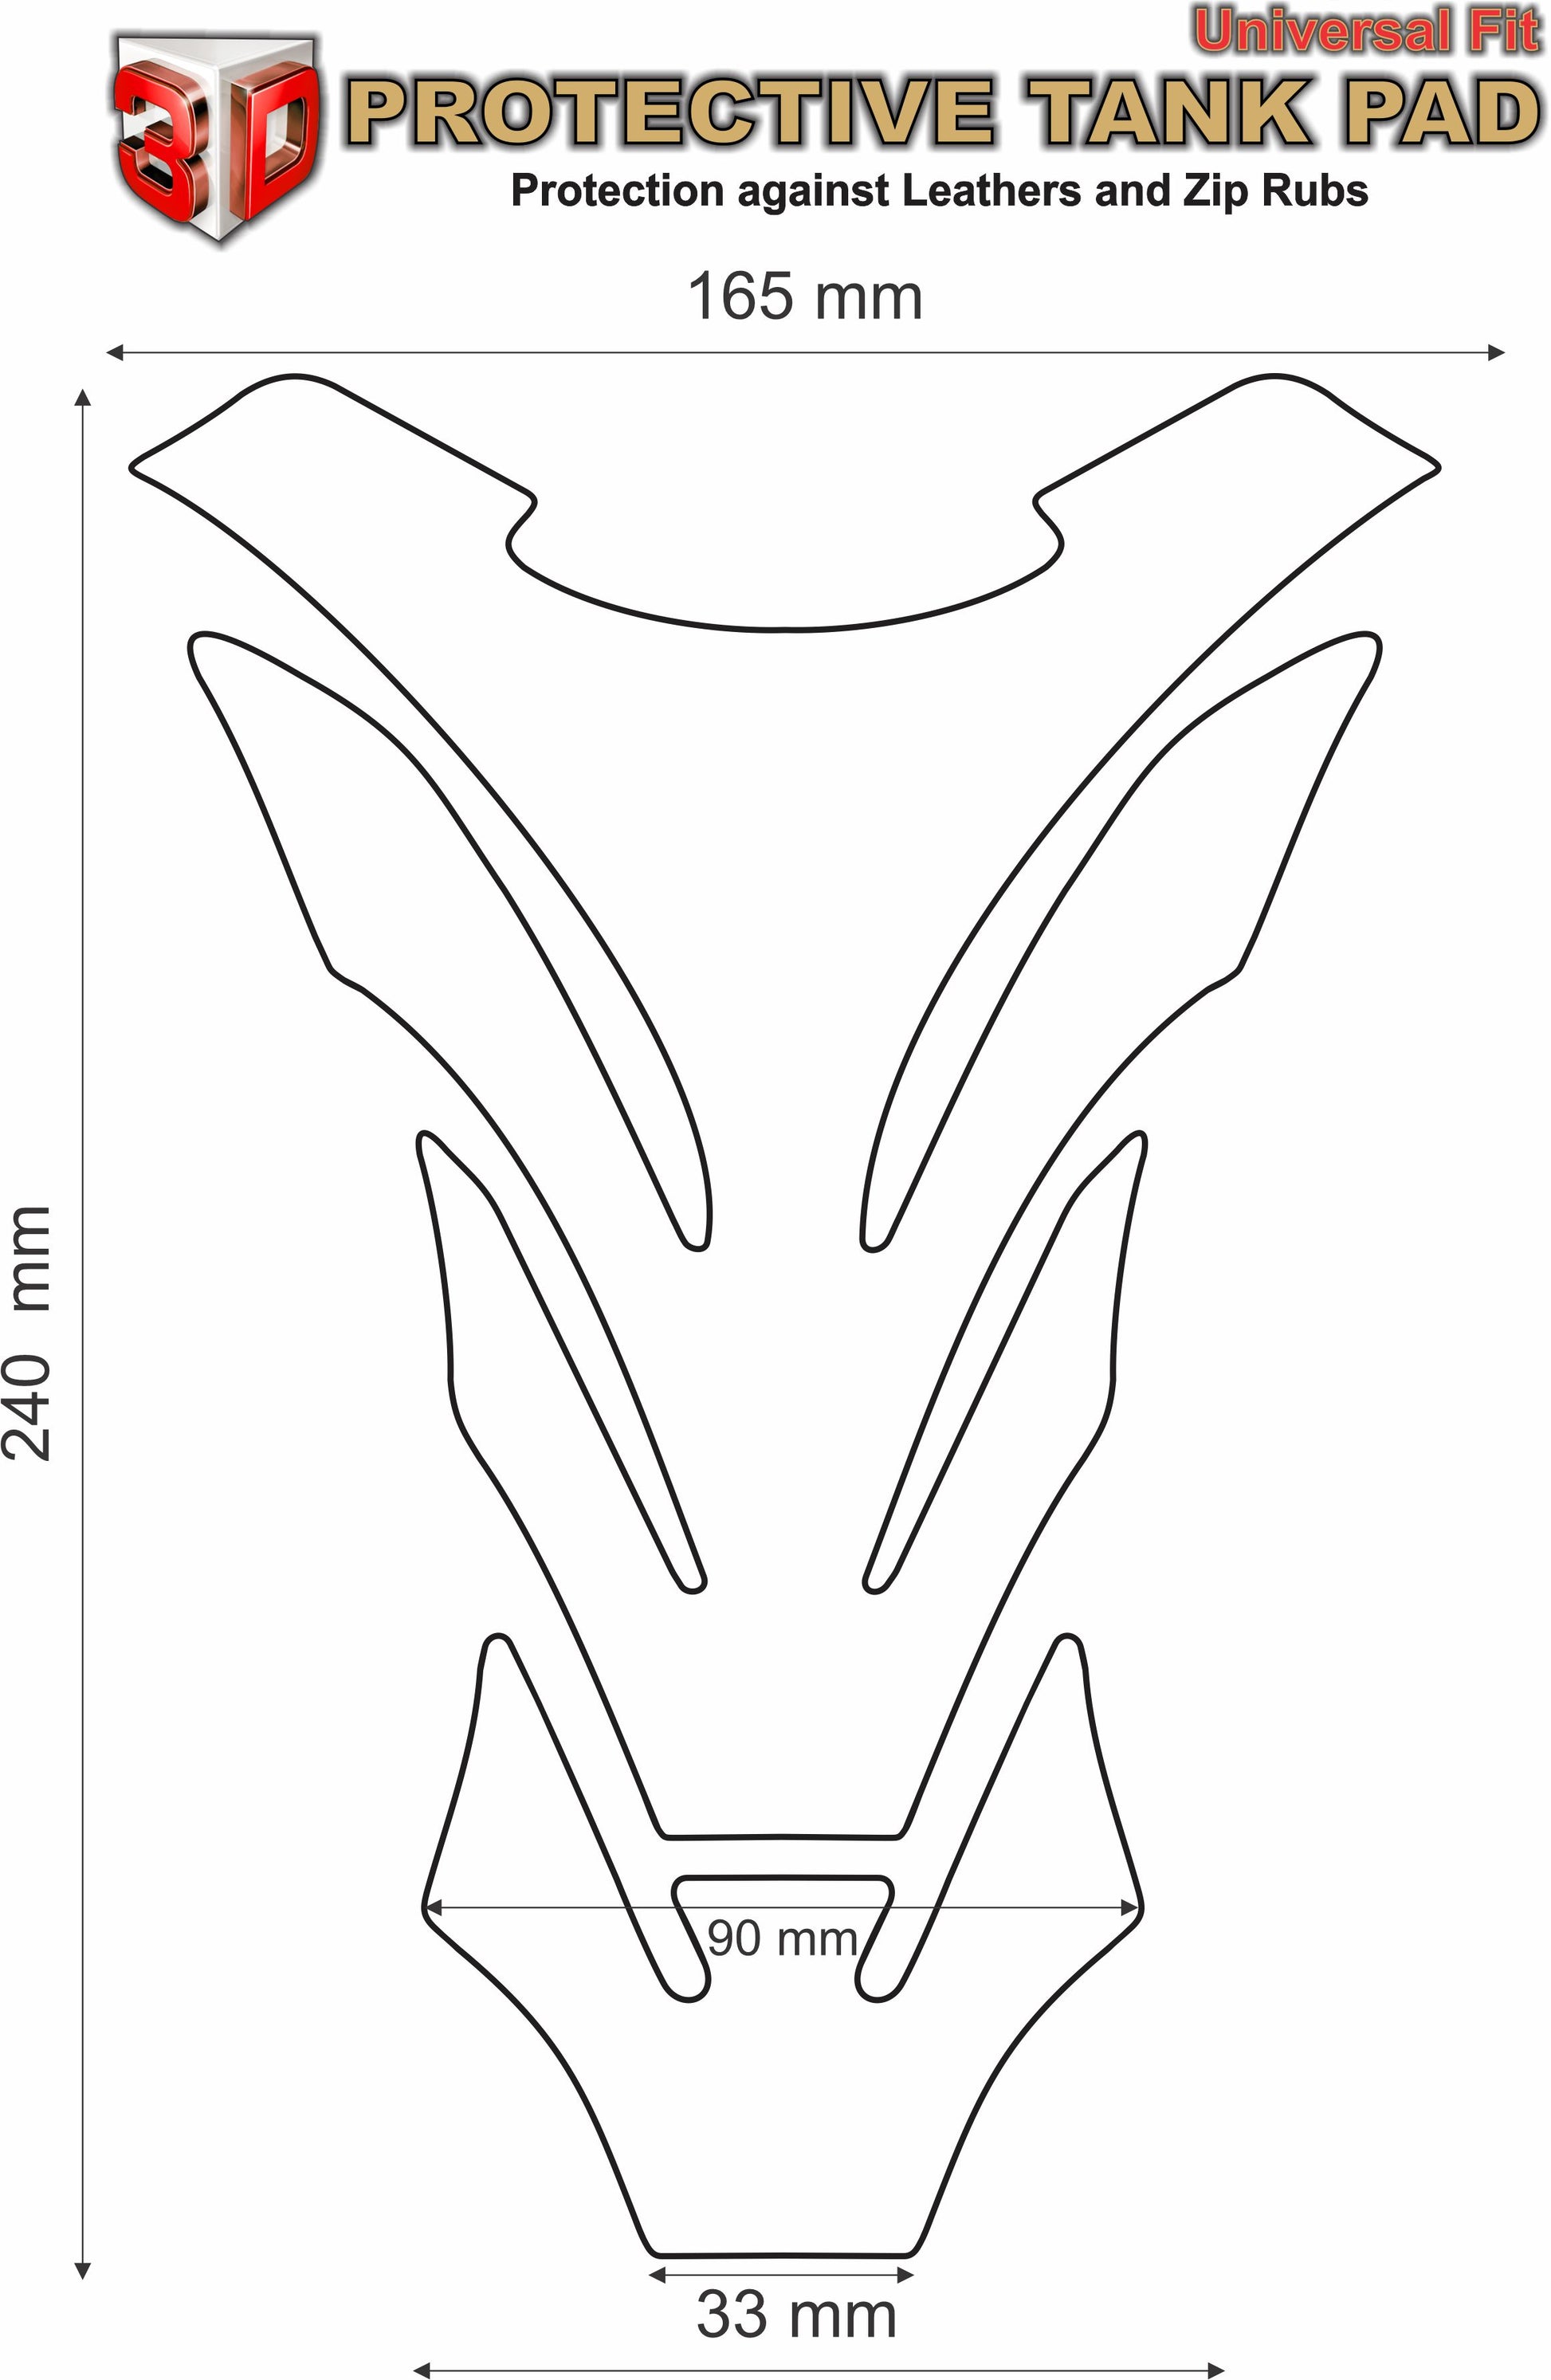 Yamaha MT Series. Black Slim Series Motor Bike Tank Pad Protectors. MT 01. MT 03. MT 07. MT 09. MT 10